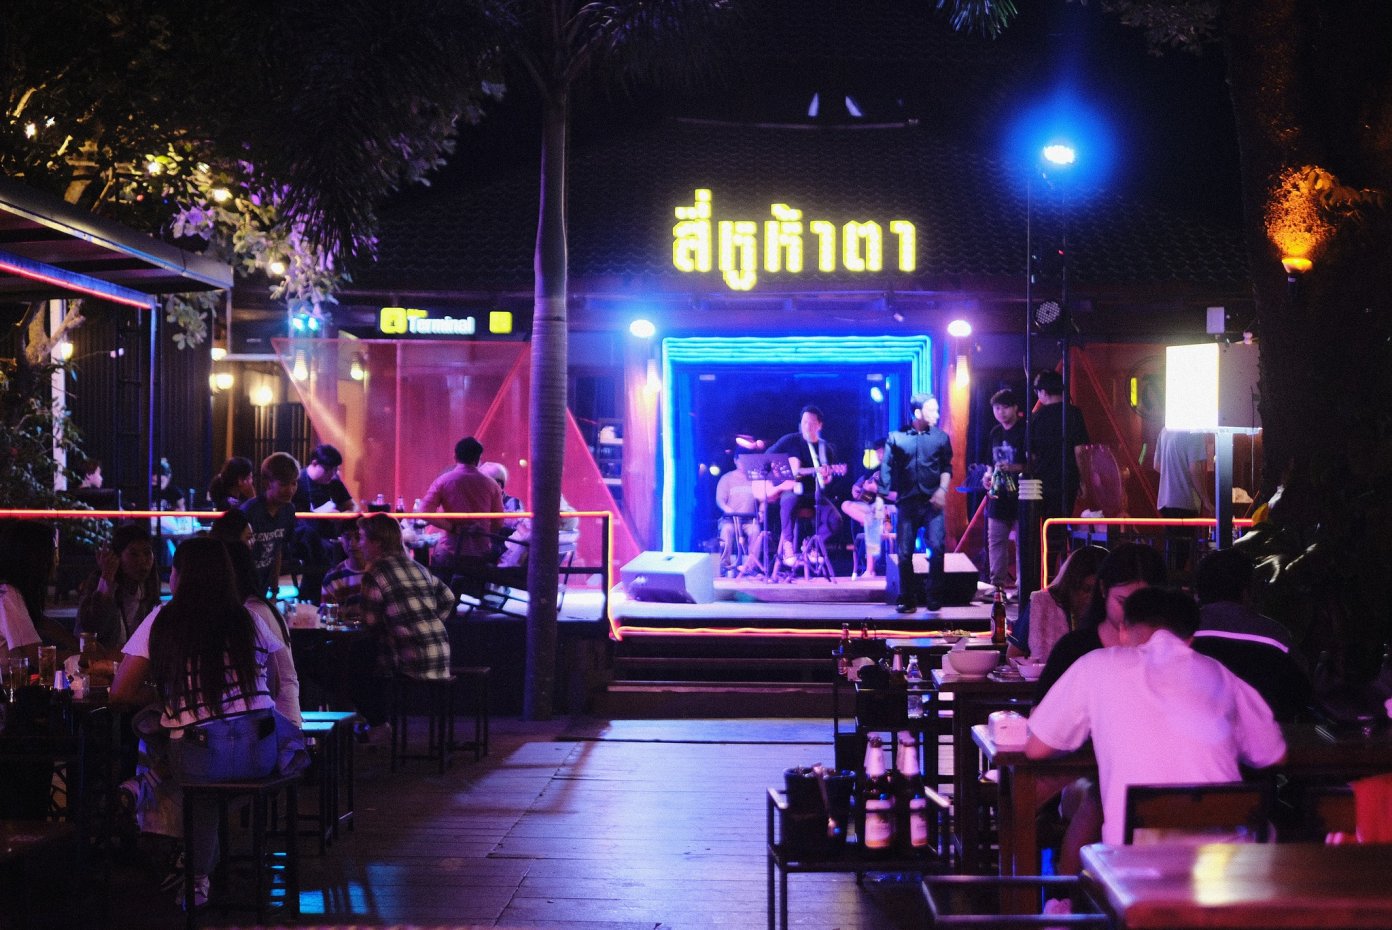 4hoo5taa : Chiang Rai